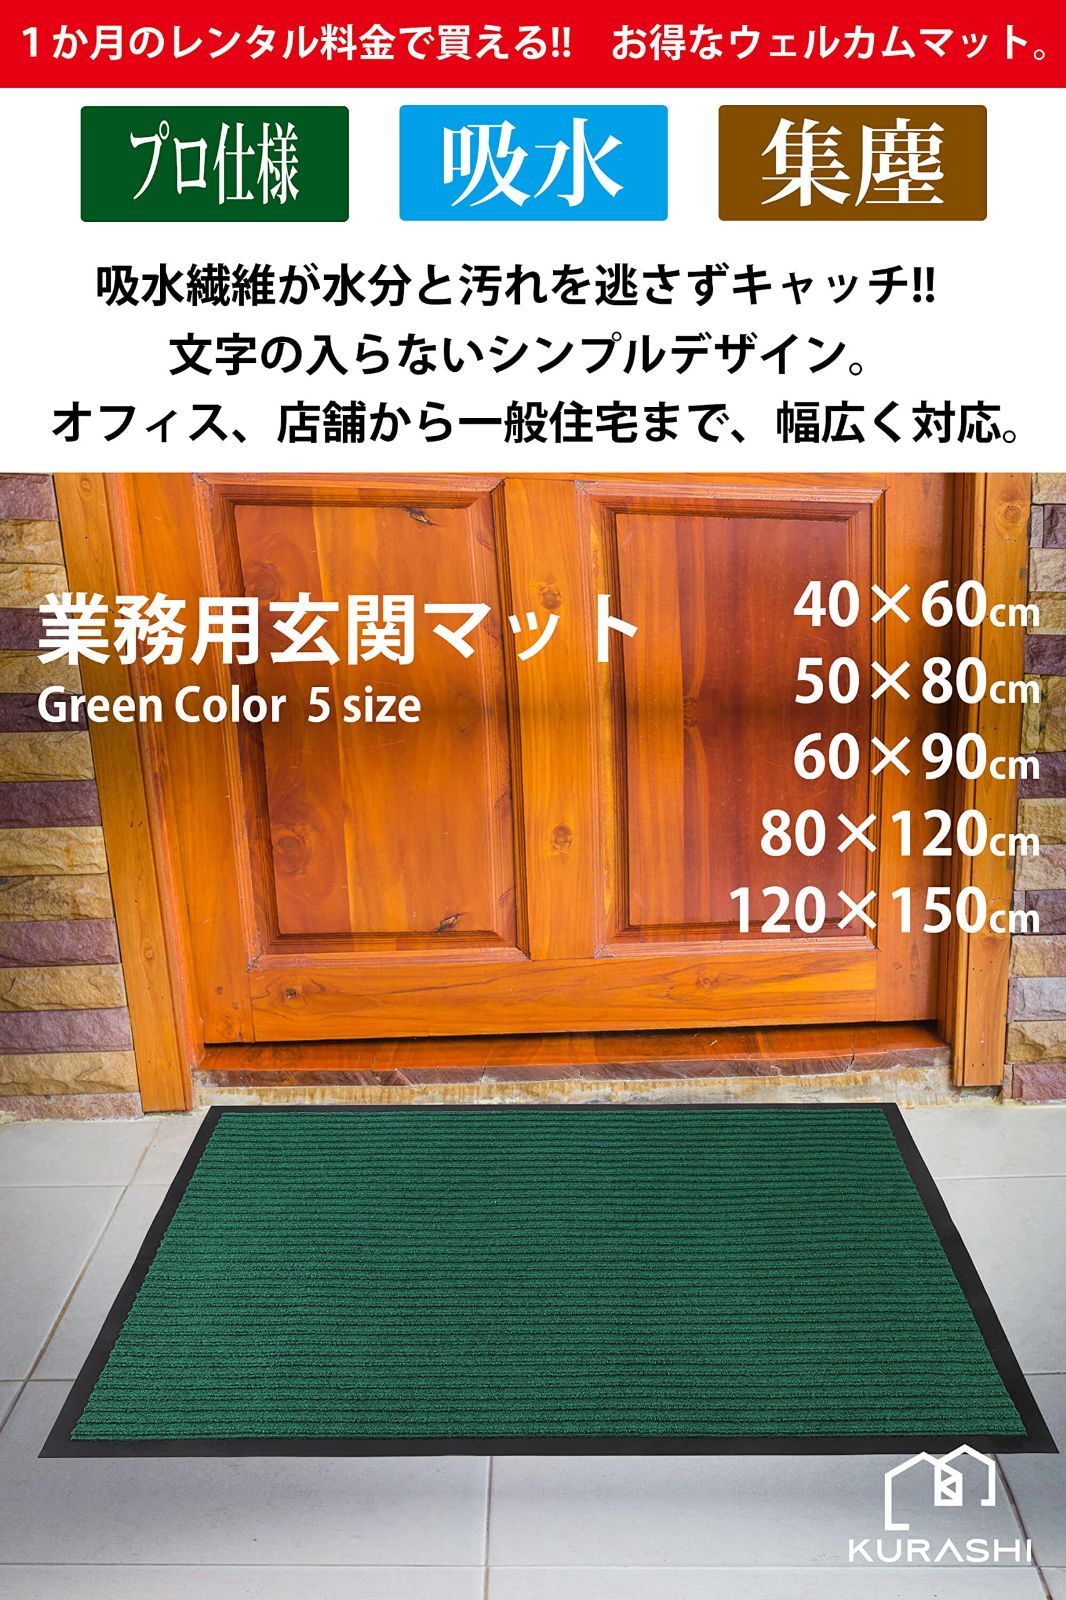 KURASHI 玄関マット 屋外 室内 滑り止め 業務用 無地 マット シンプル 泥落とし 吸水 (グリーン 80×120cm) - メルカリ